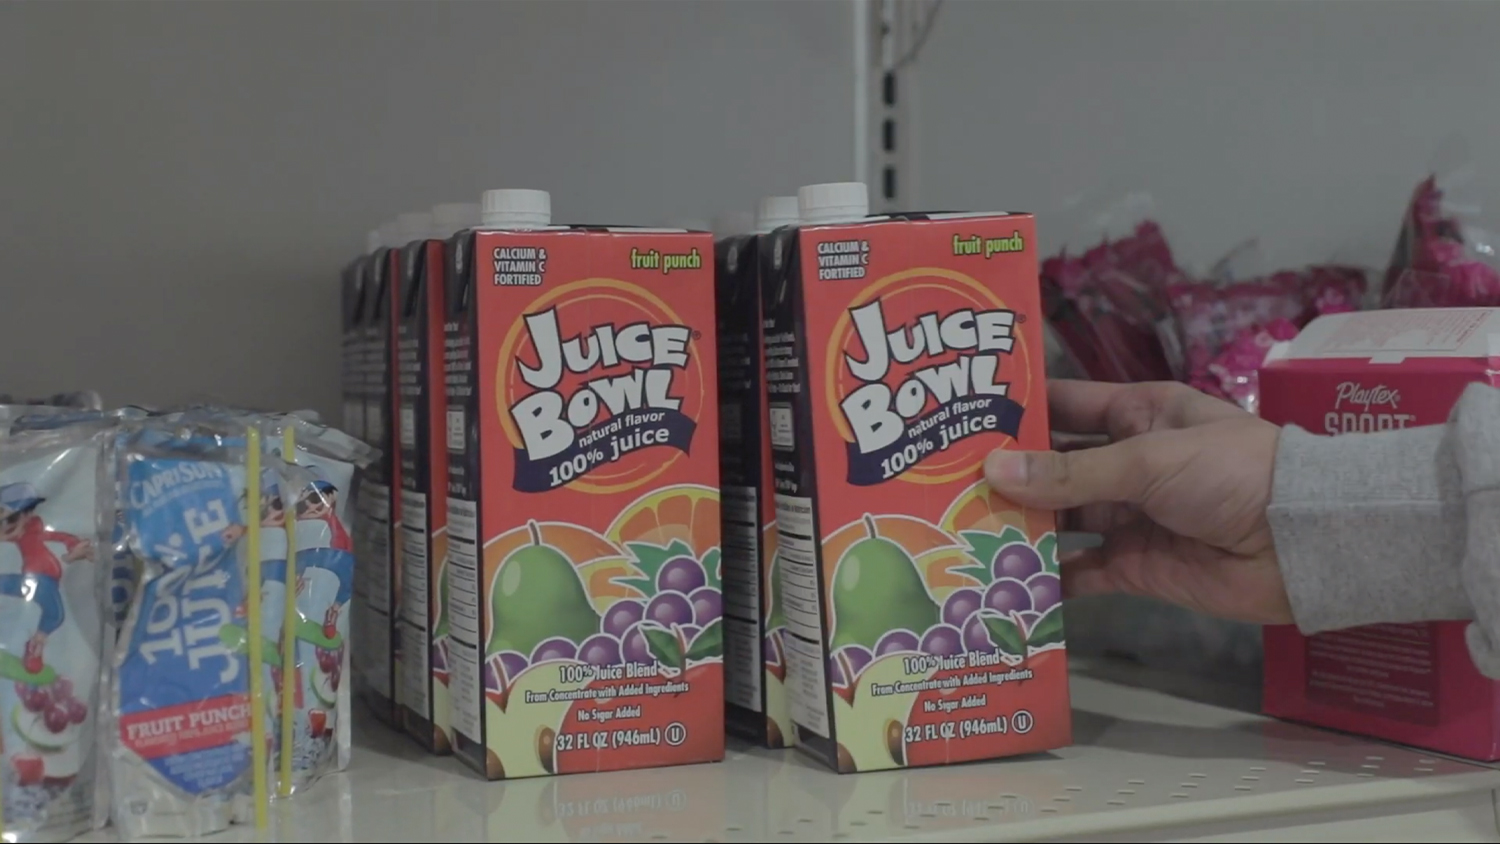 A staff member's hand places a juice box on a shelf